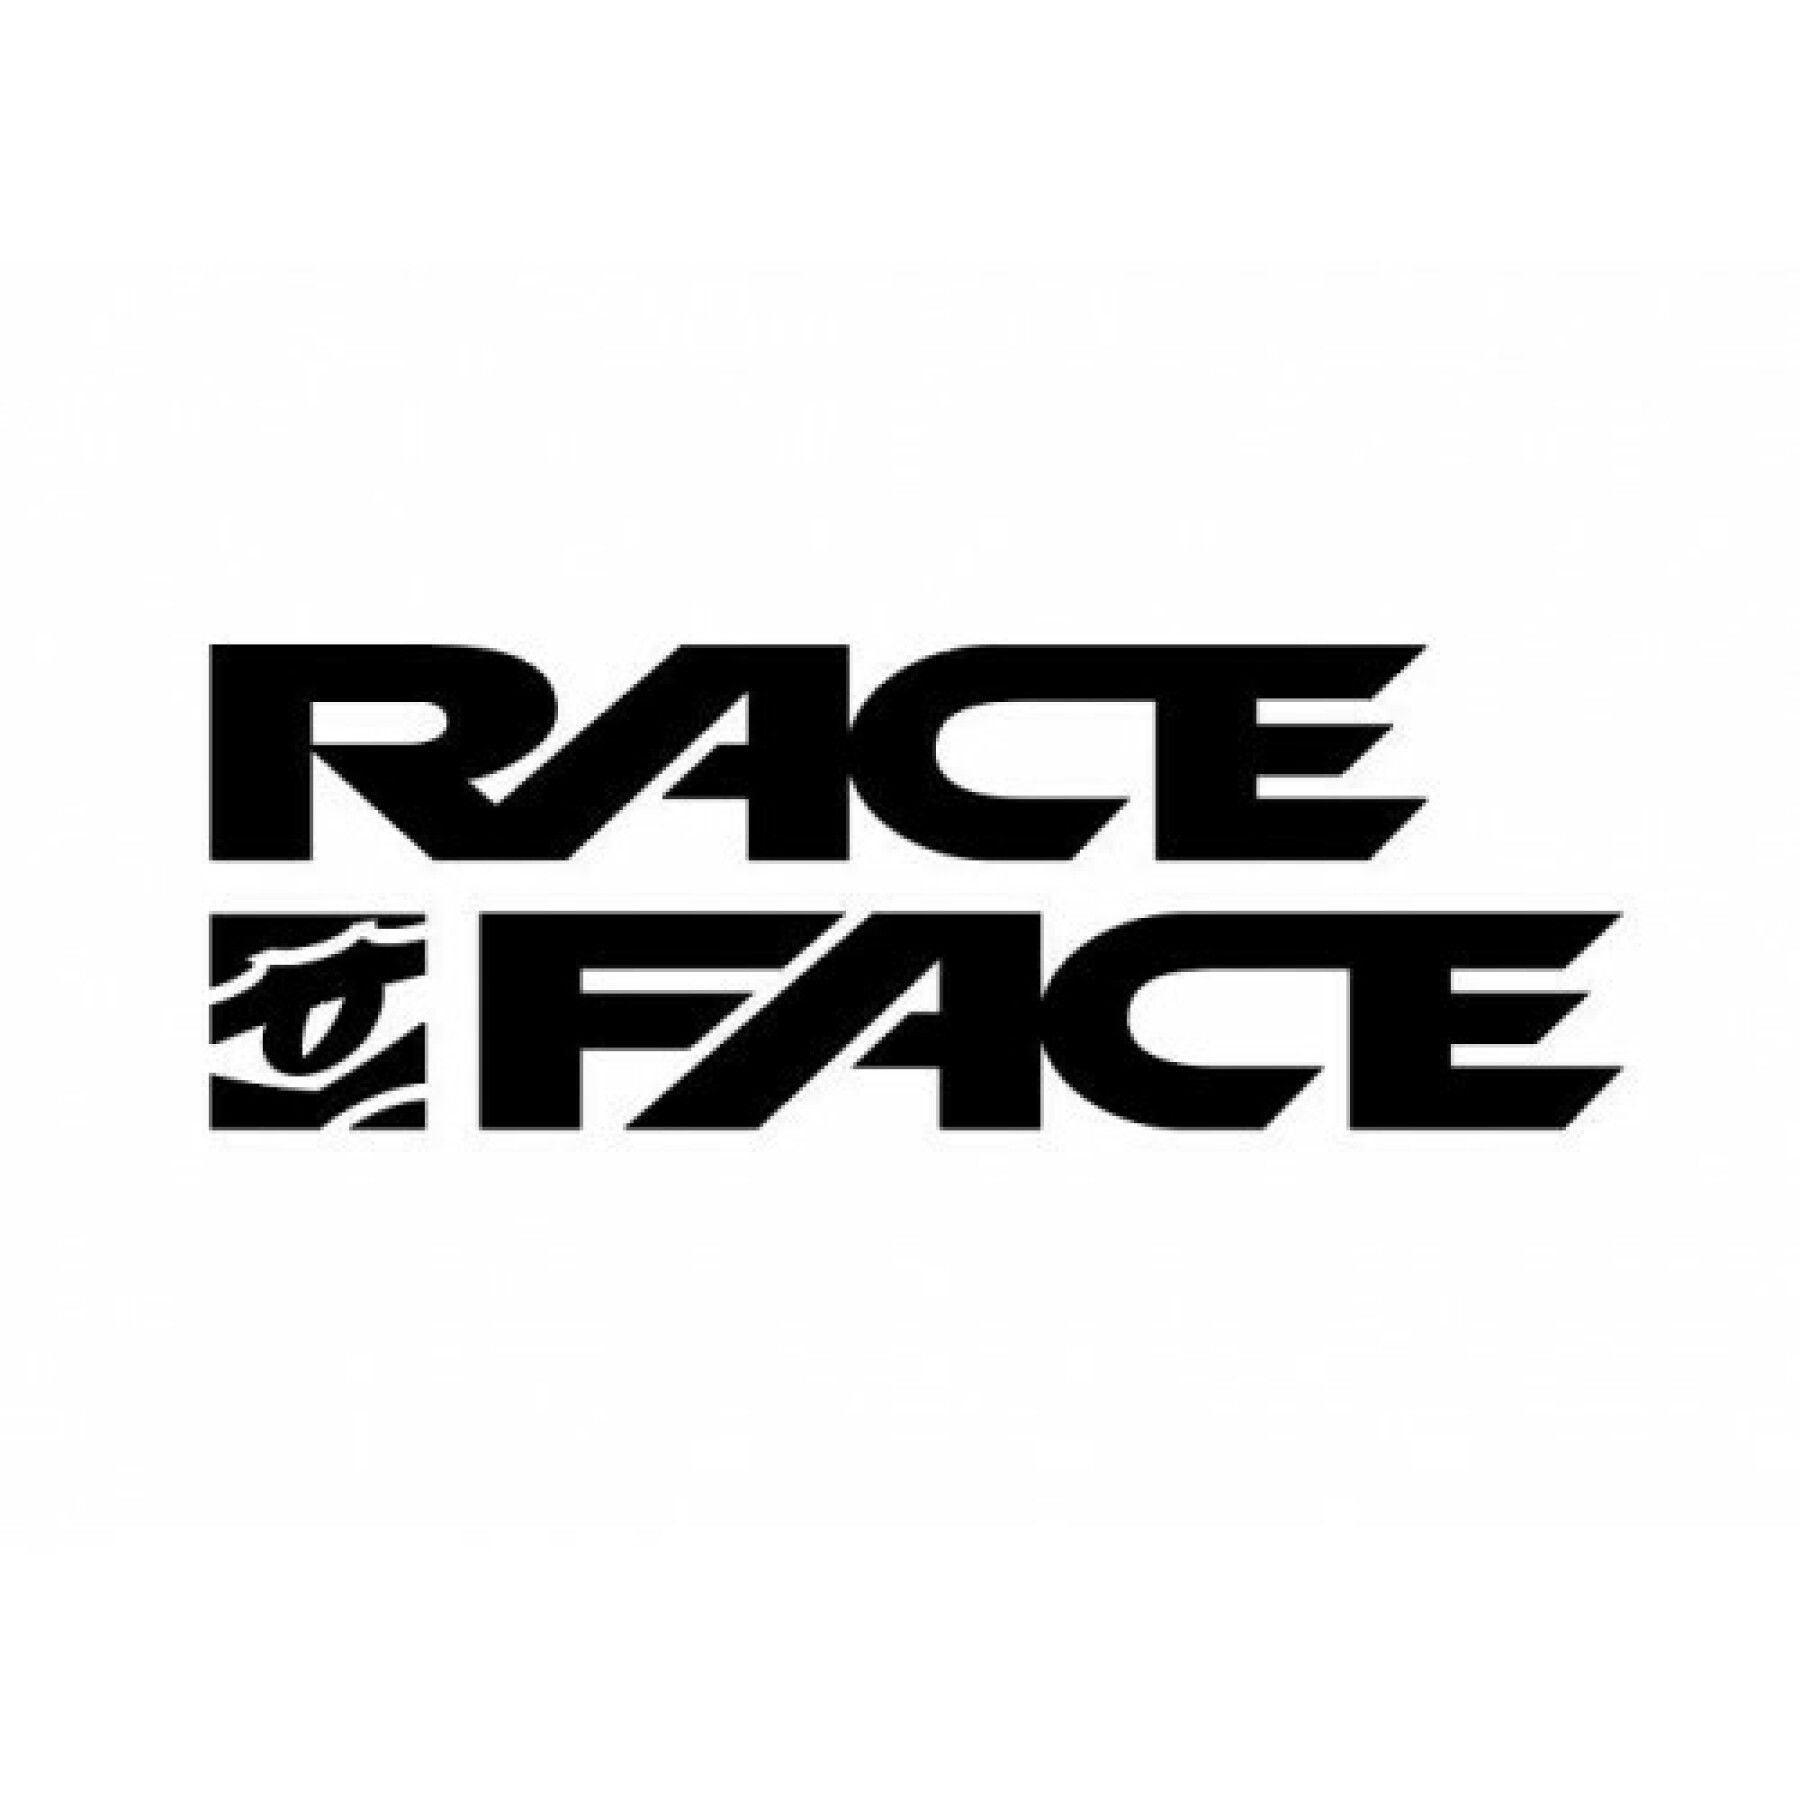 Llanta Race Face arc heavyduty 30 - 29 - 32t